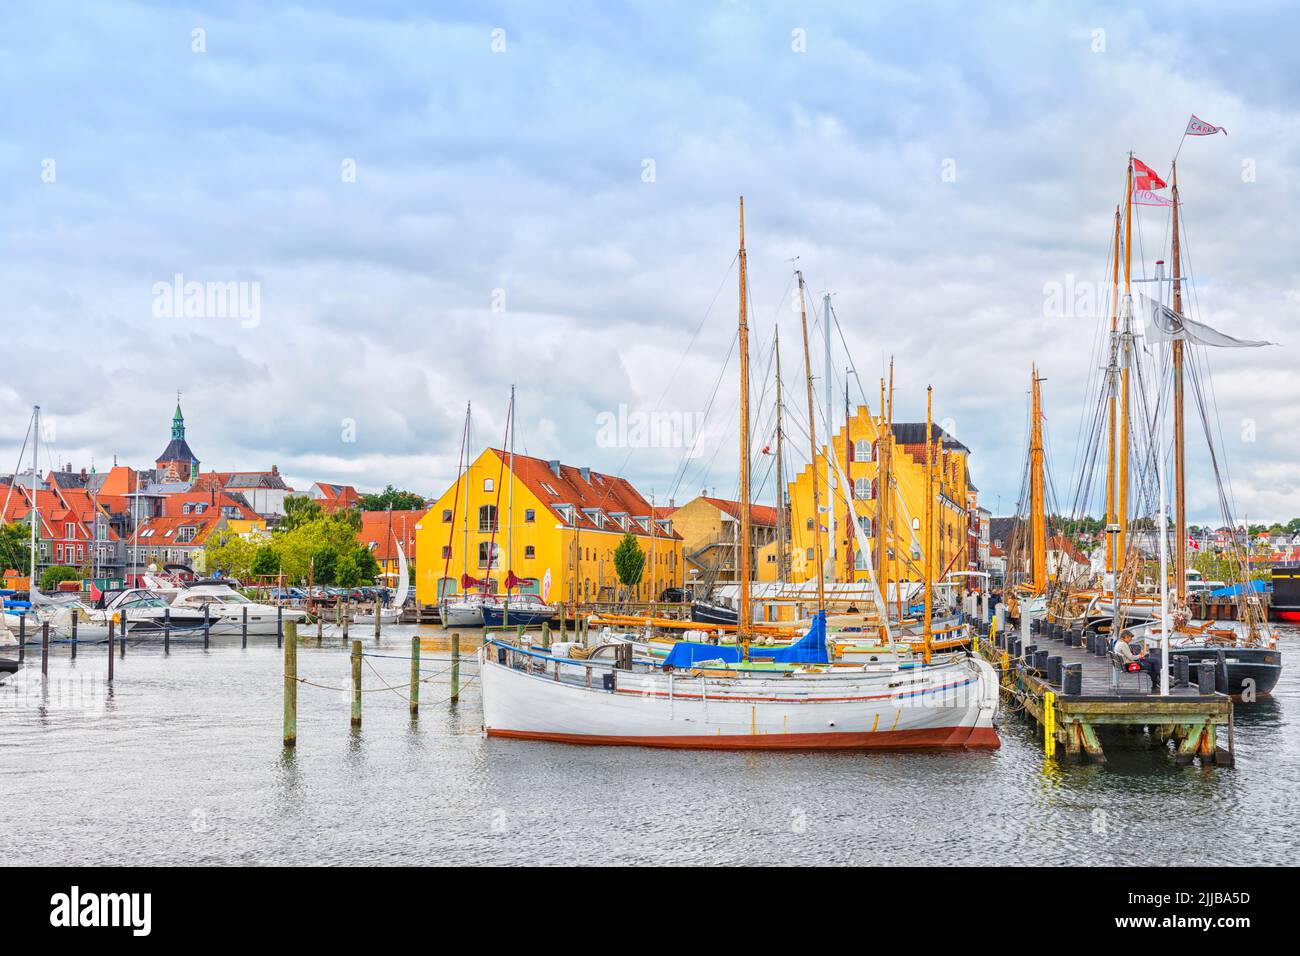 Cityscape with marina and pier for historic sail boats at Svendborg, Denmark Stock Photo